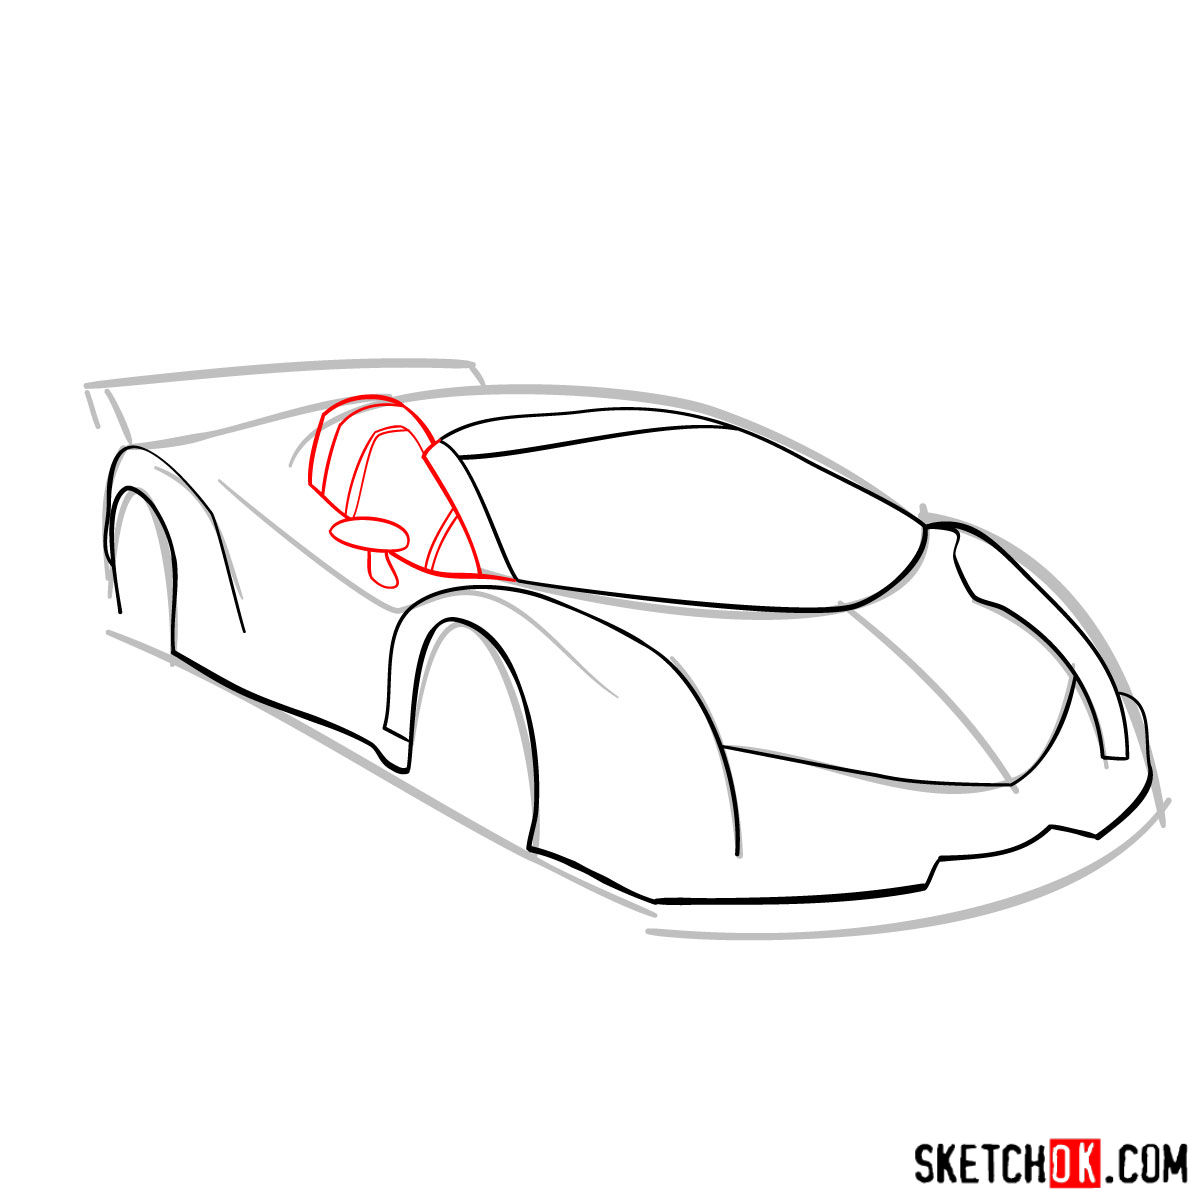 How to draw Lamborghini Veneno - Step by step drawing ...